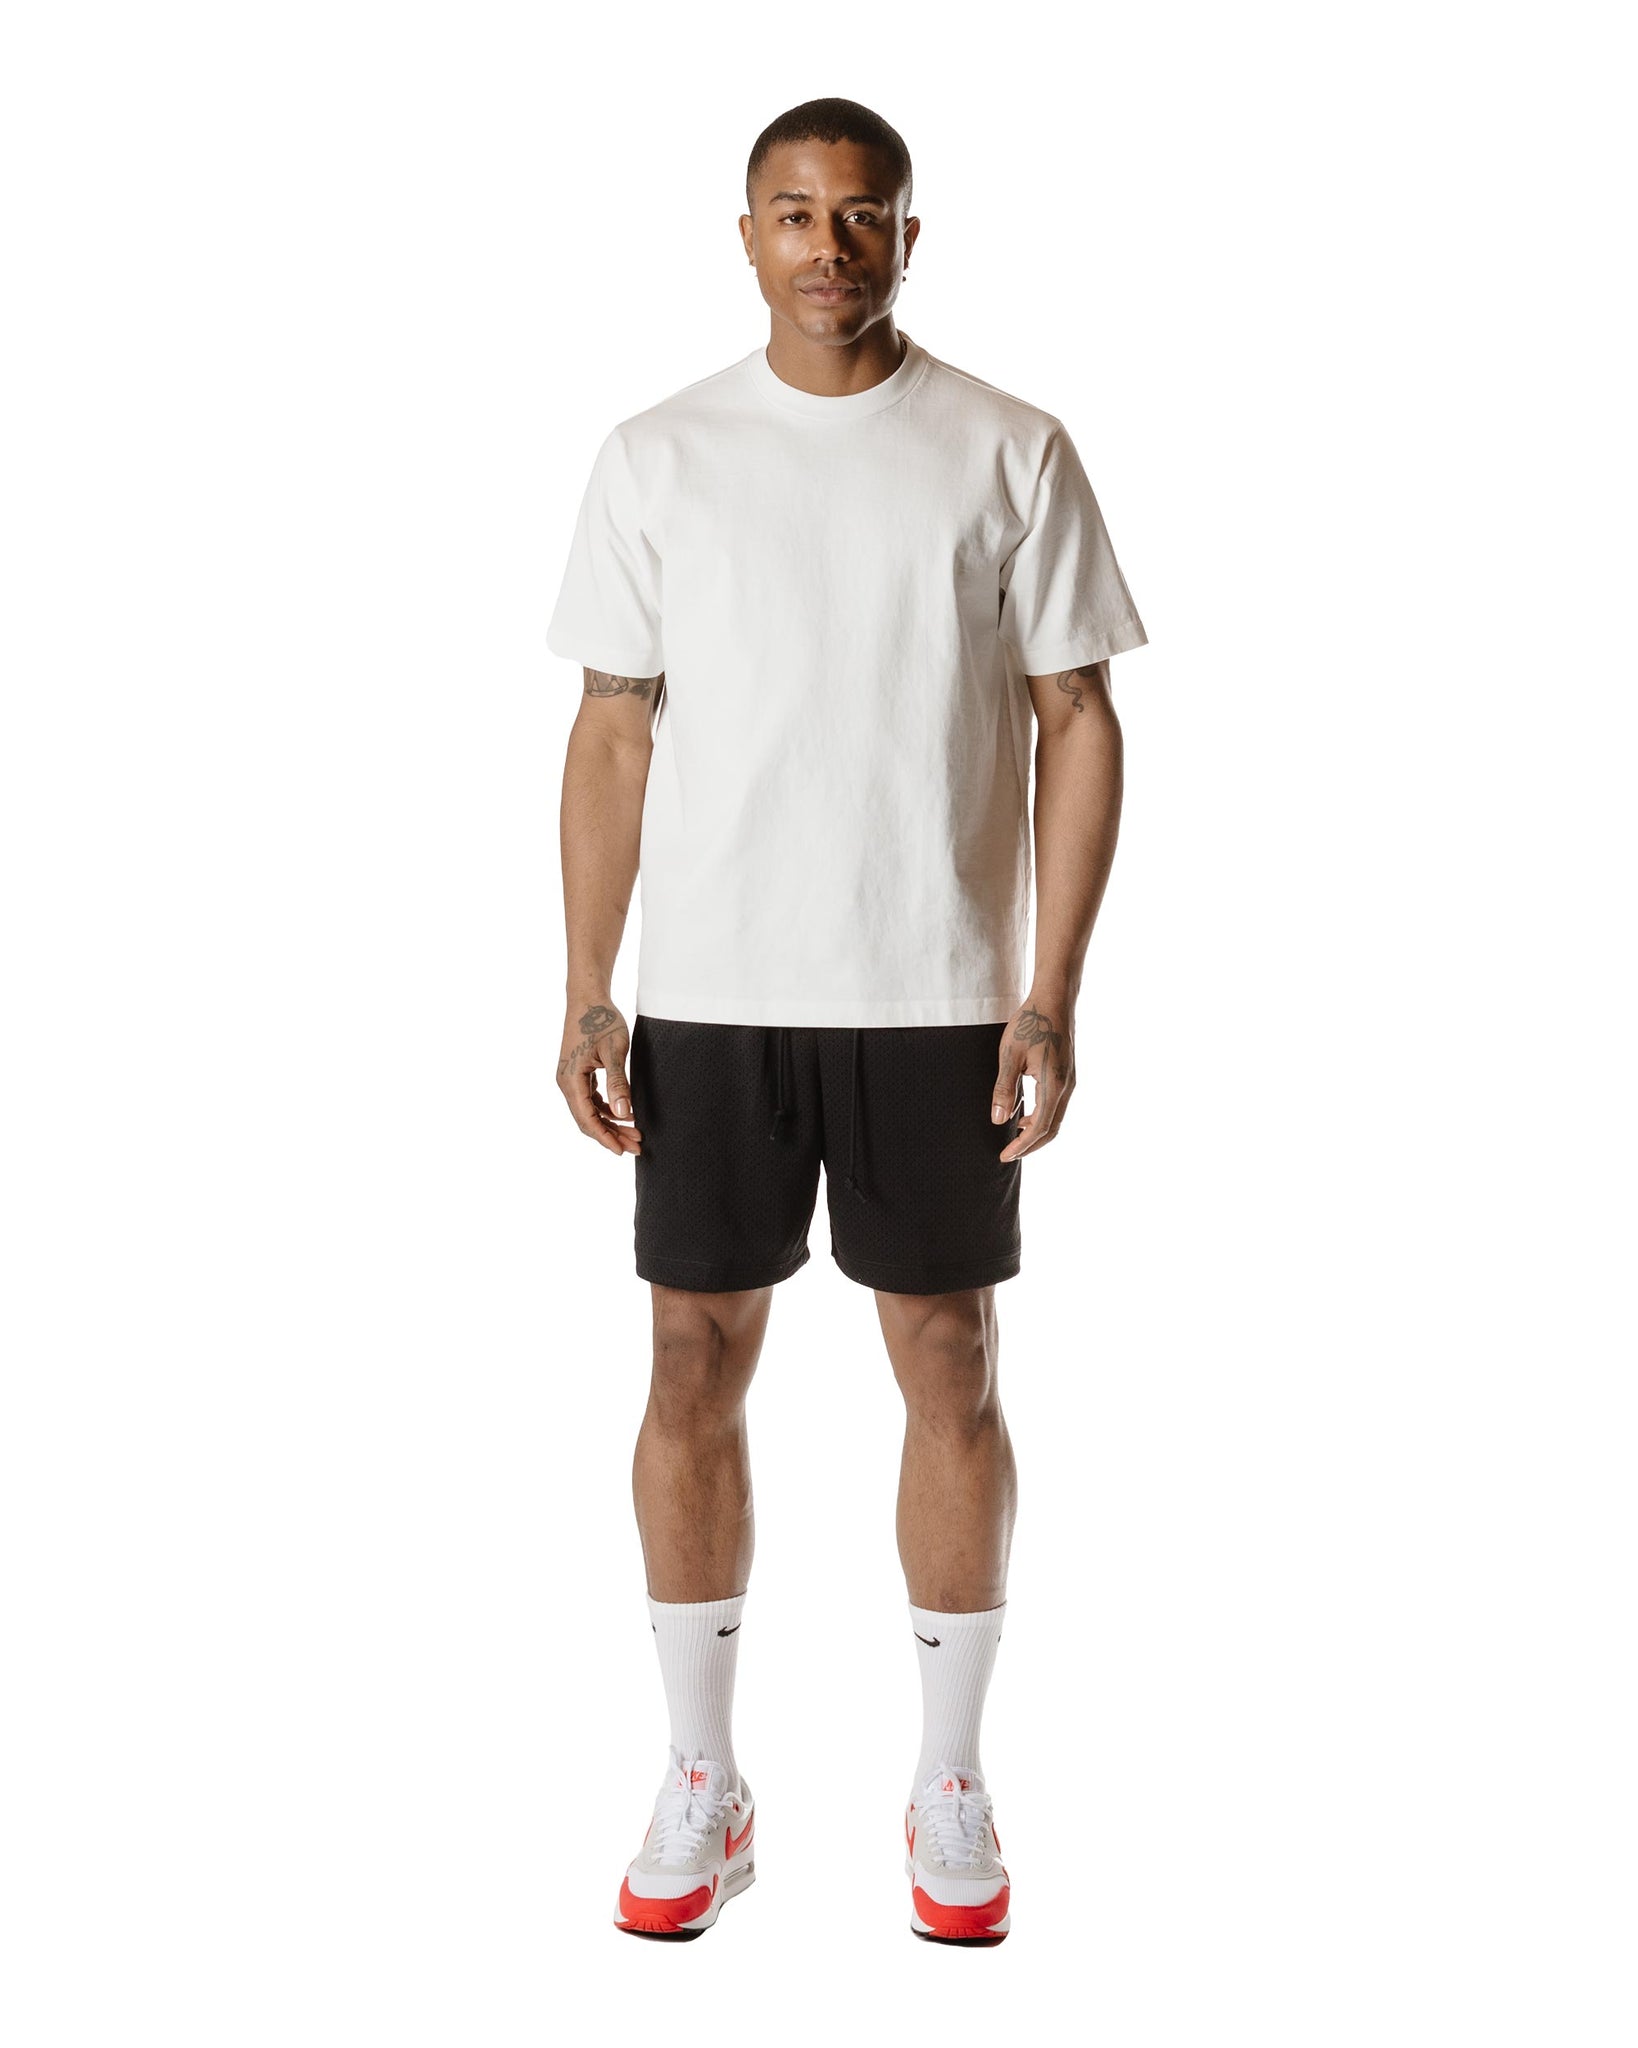 Nike Sportswear Authentics Mesh Shorts Black Model